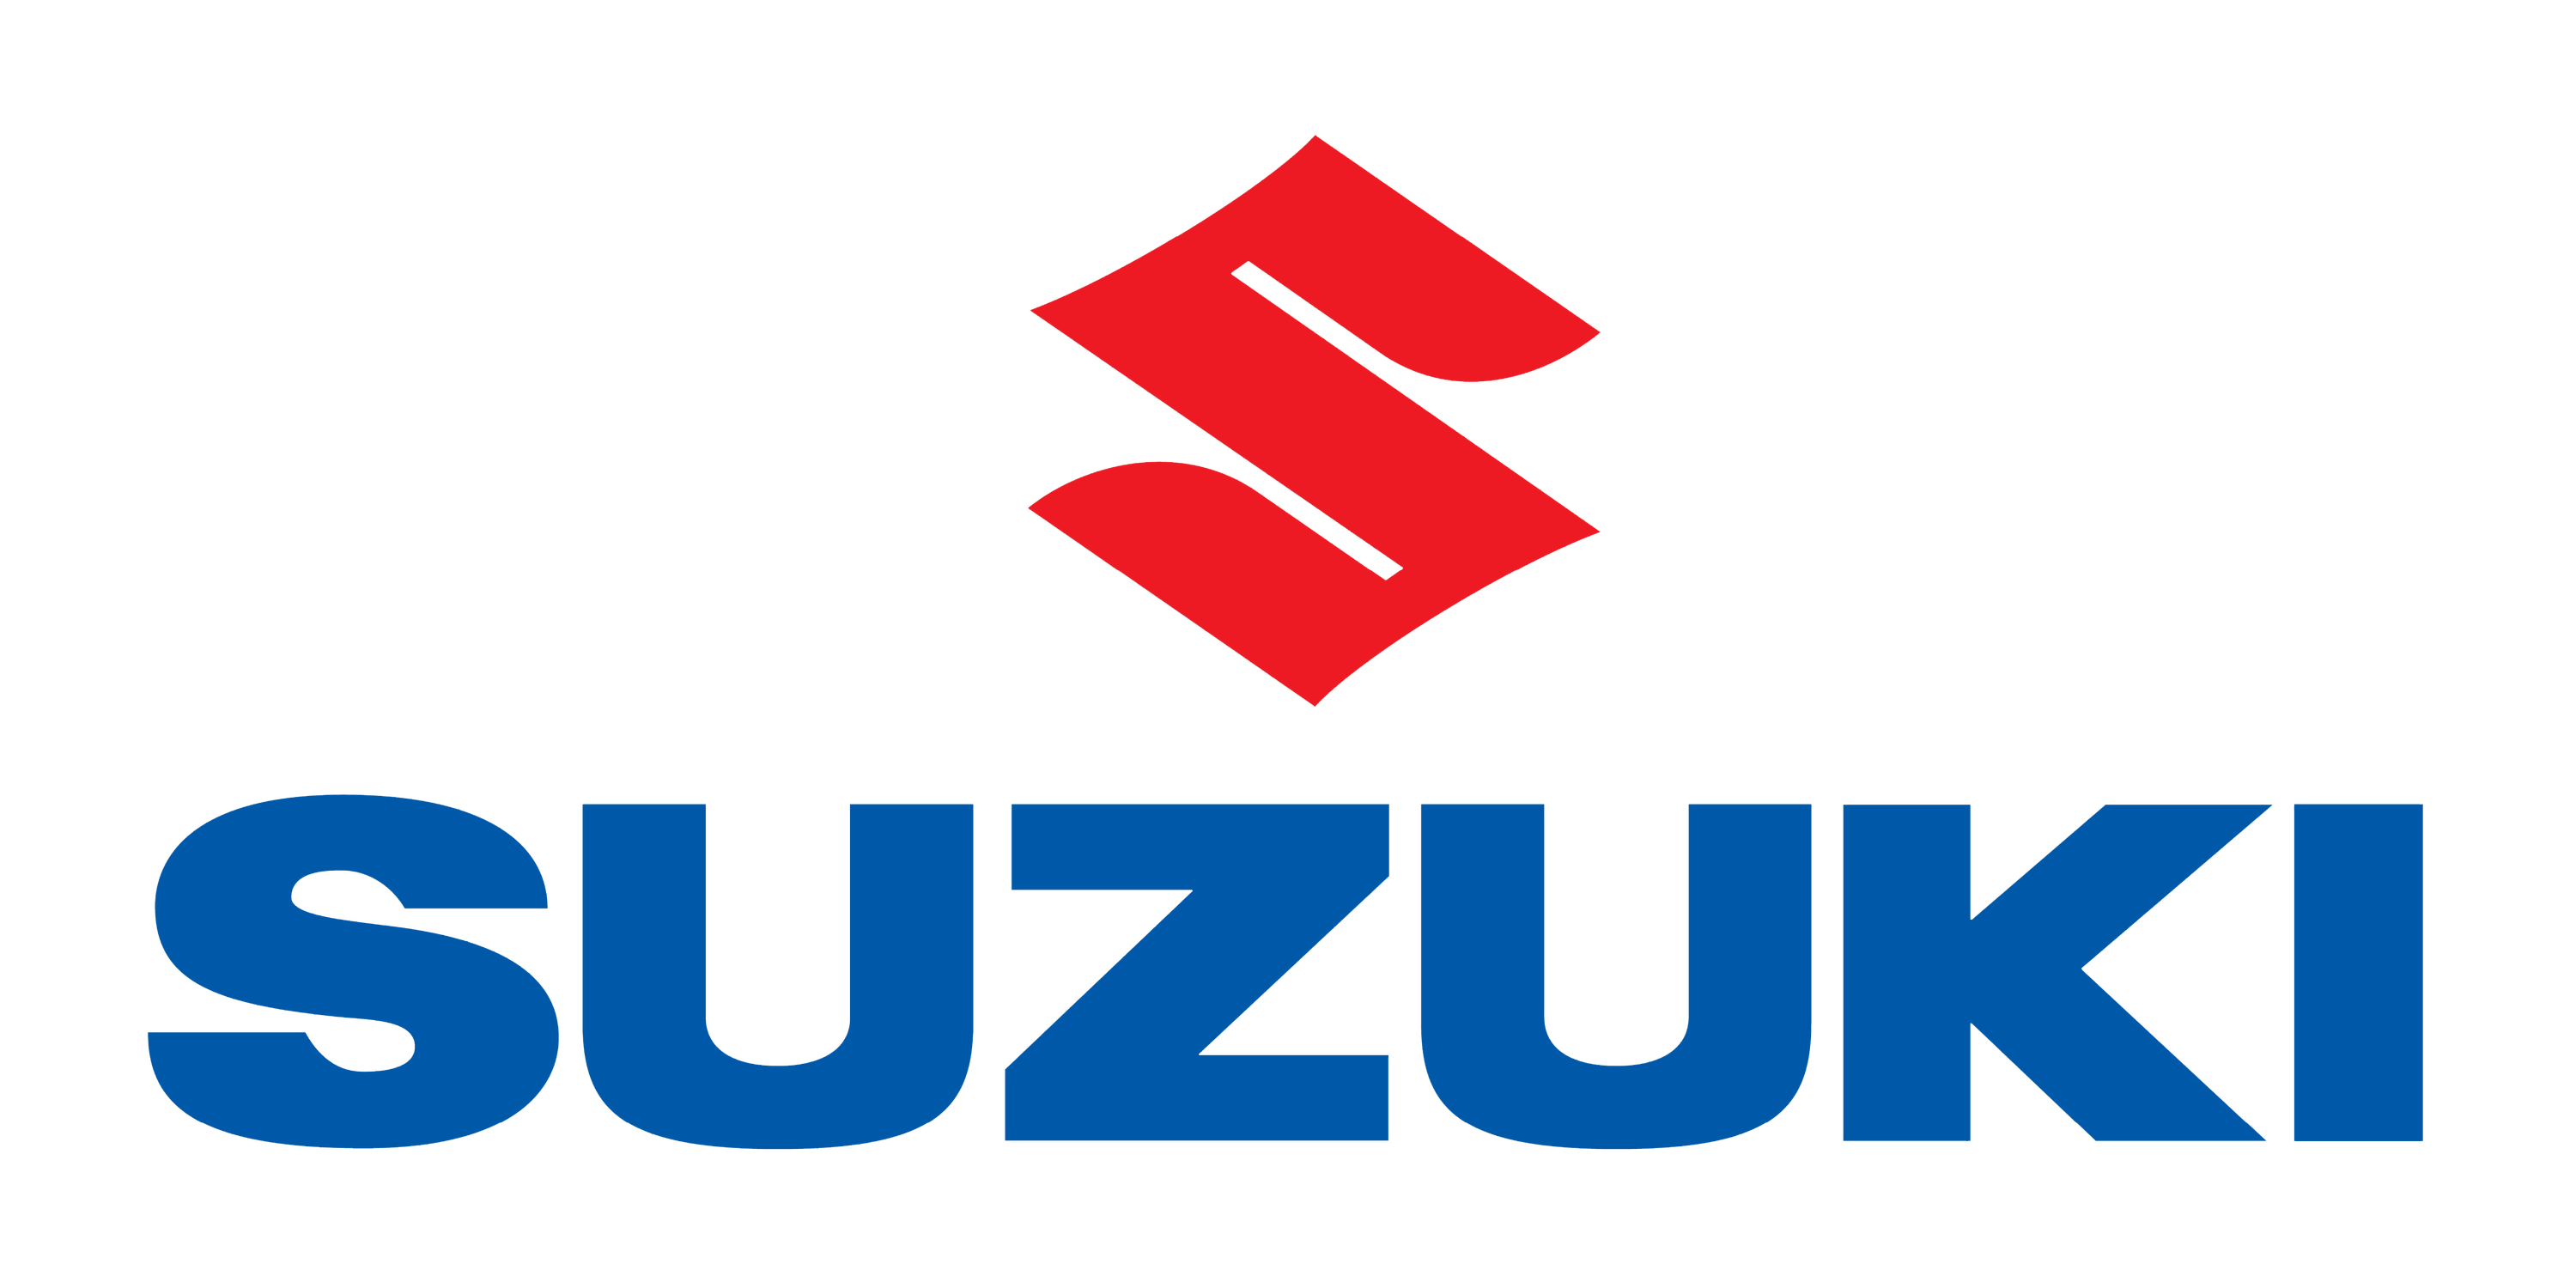 Suzuki logotipo PNG Baixar imagem